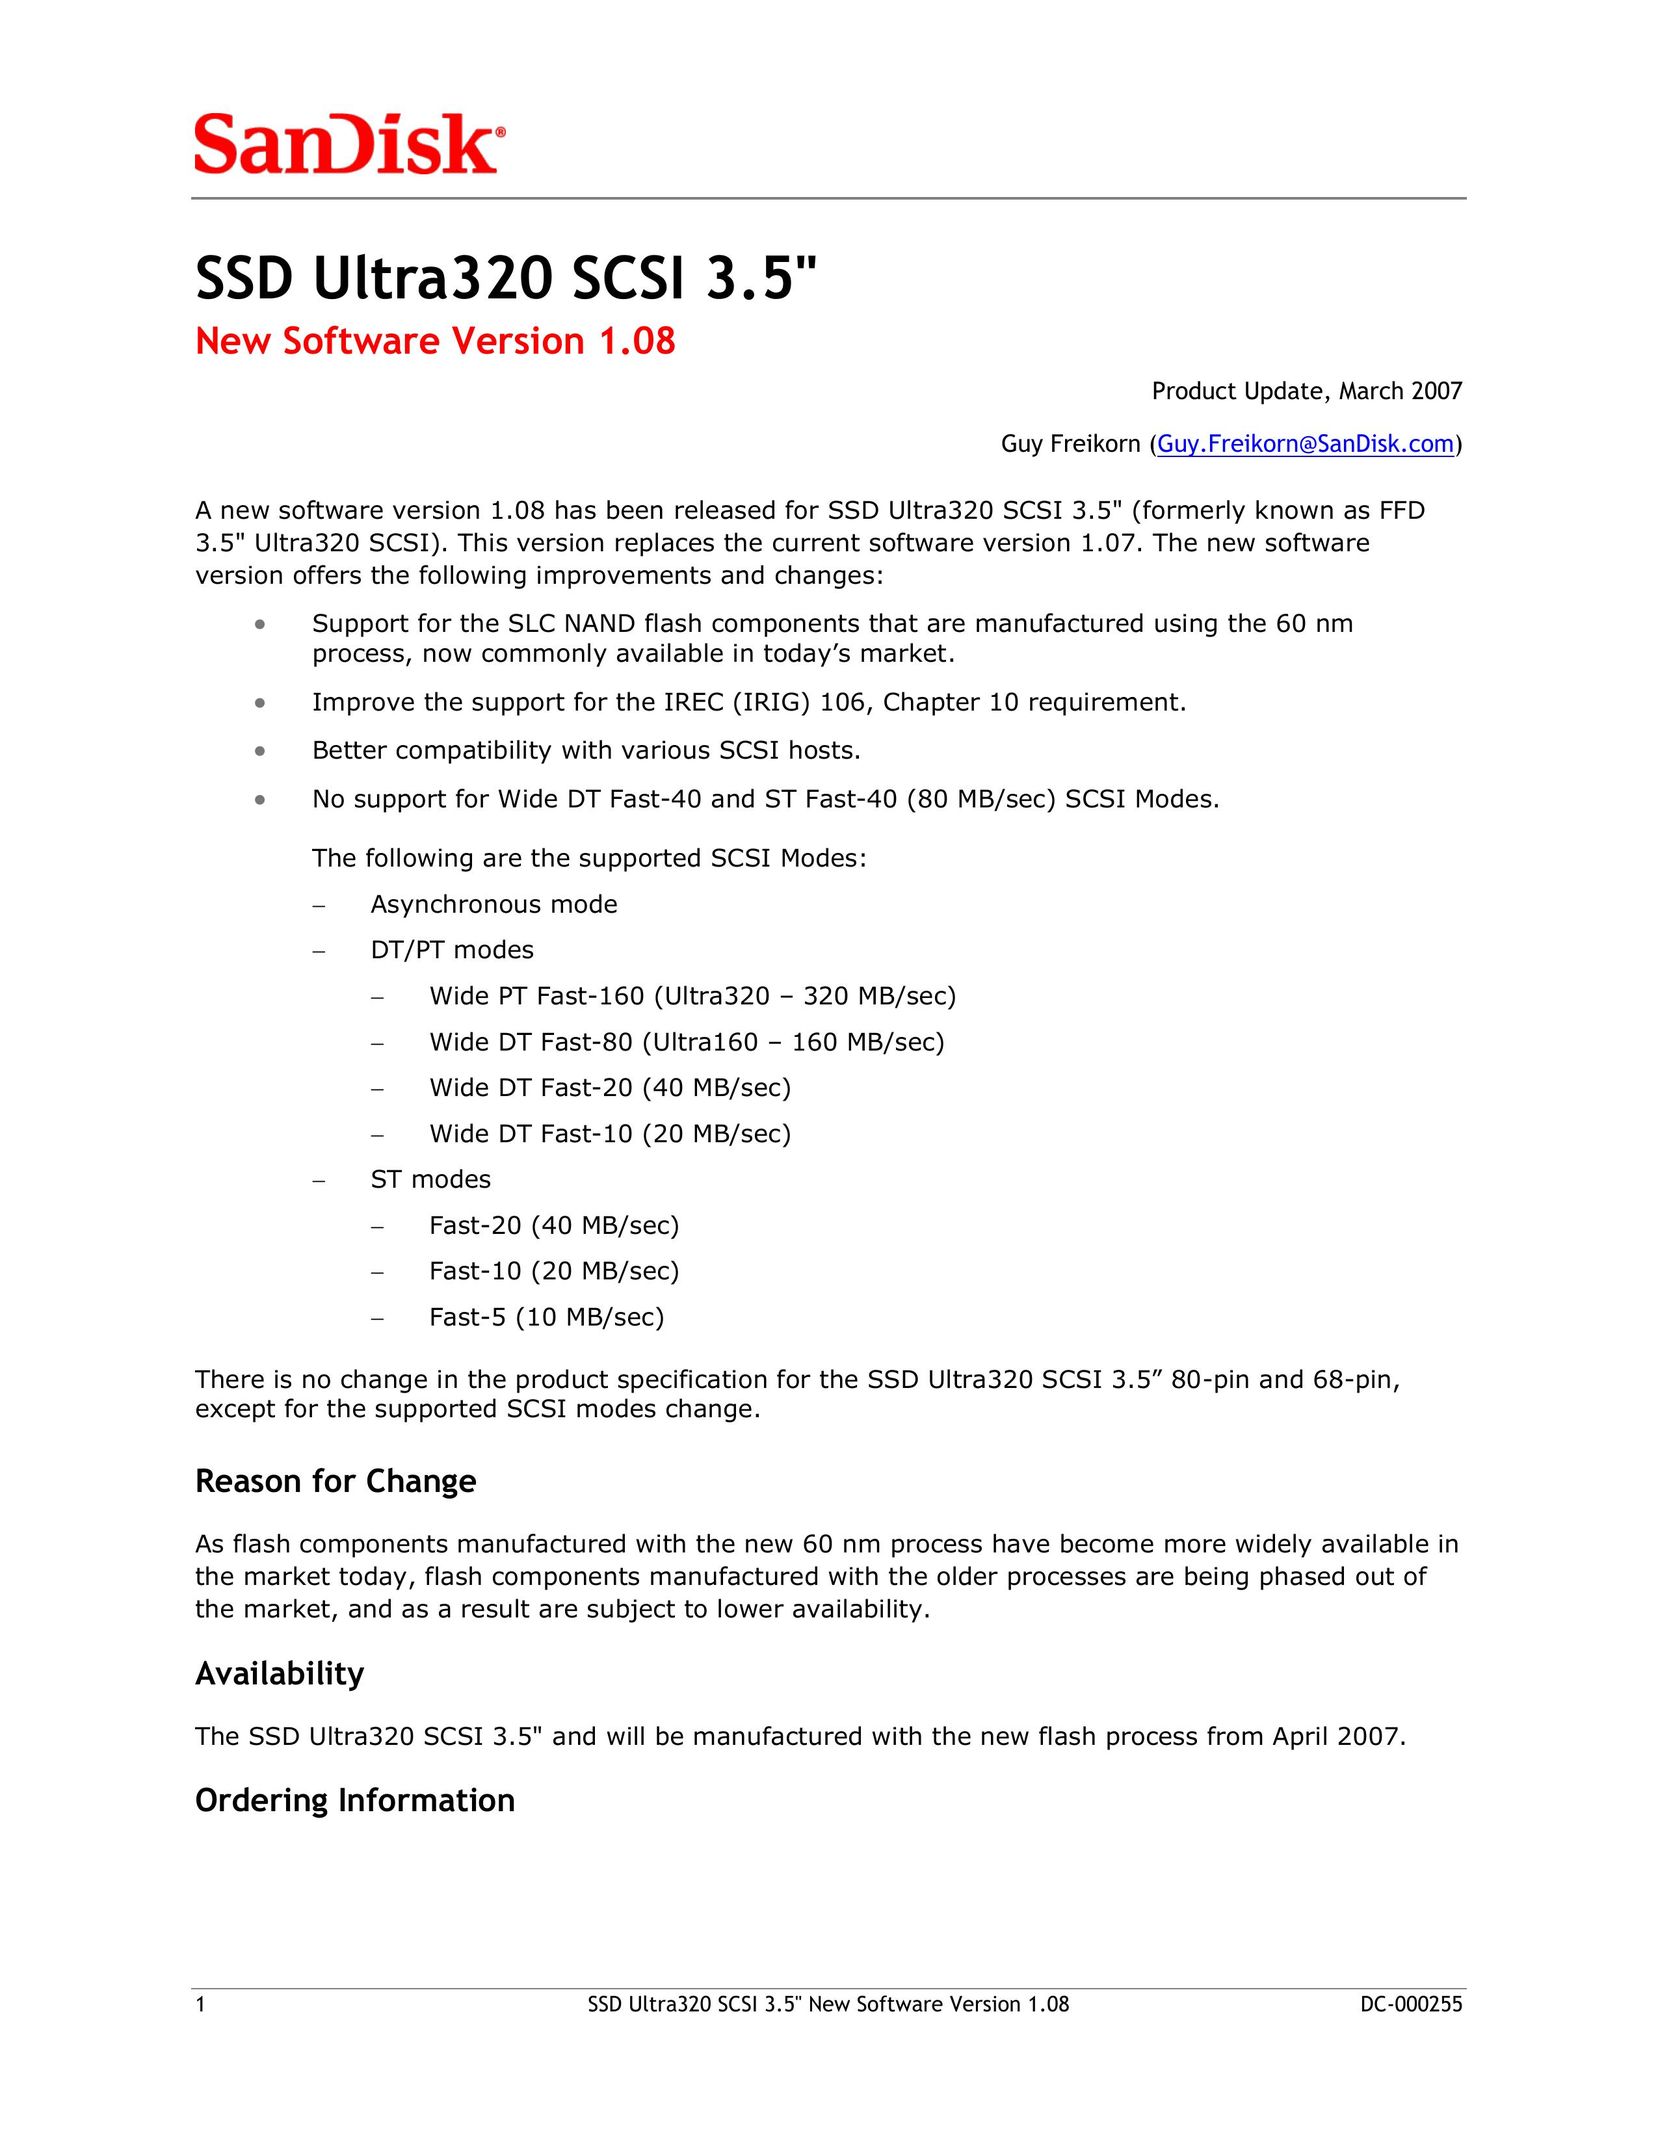 SanDisk DC-000255 Computer Drive User Manual